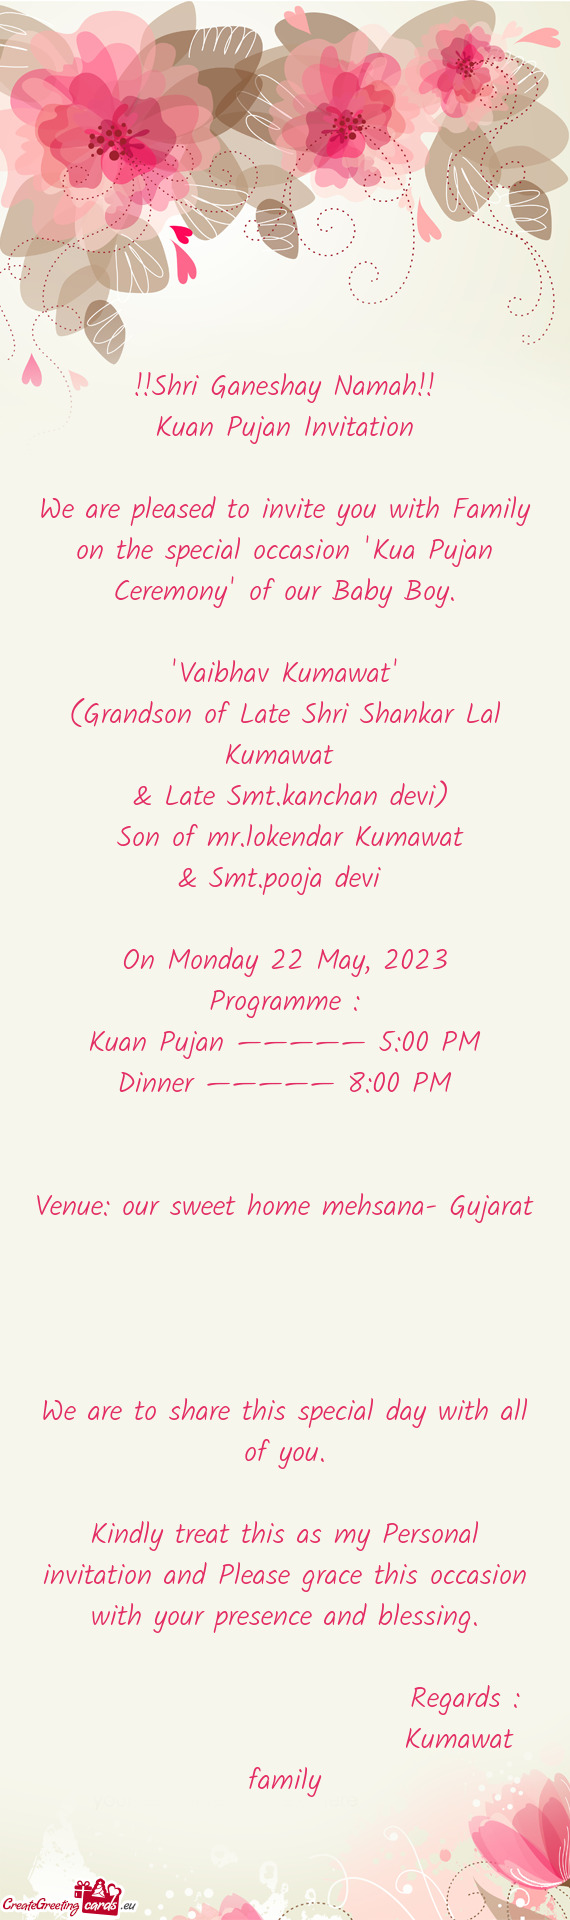 Venue: our sweet home mehsana- Gujarat